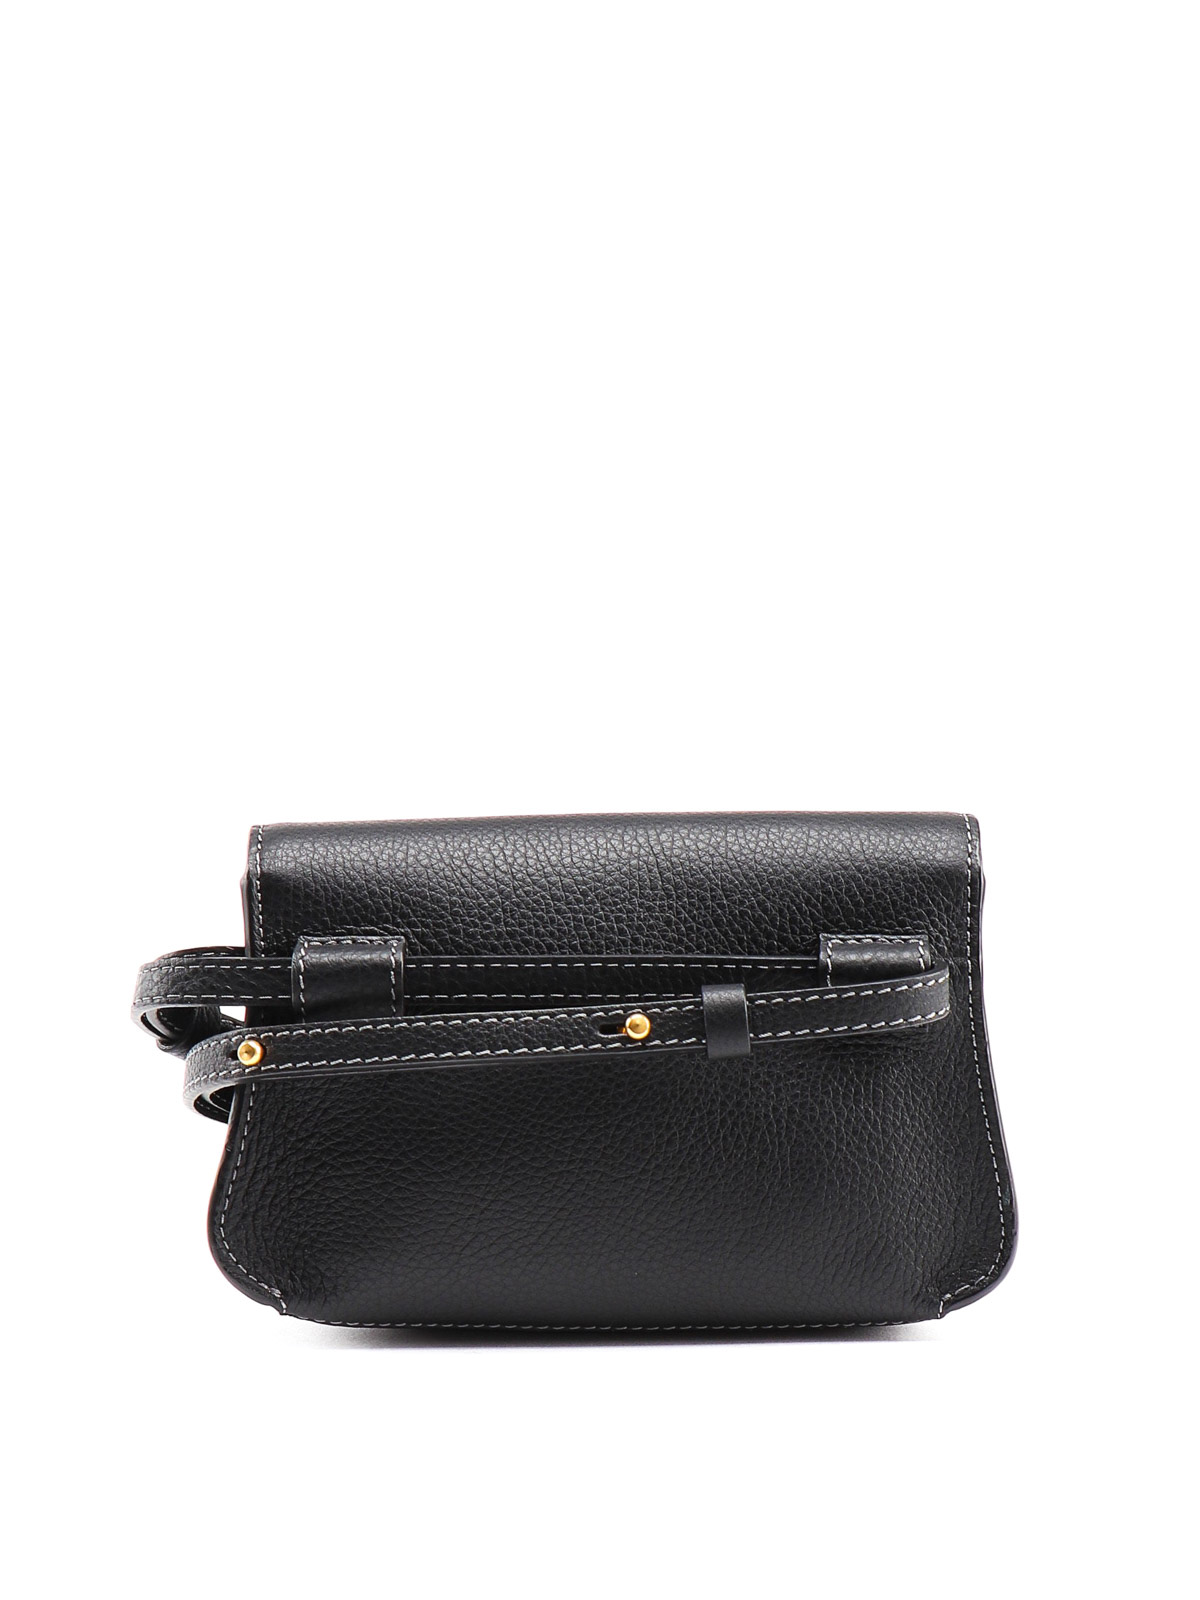 Belt Bags Chloe' - Marcie Grained Leather Belt Bag - Chc19As179161001